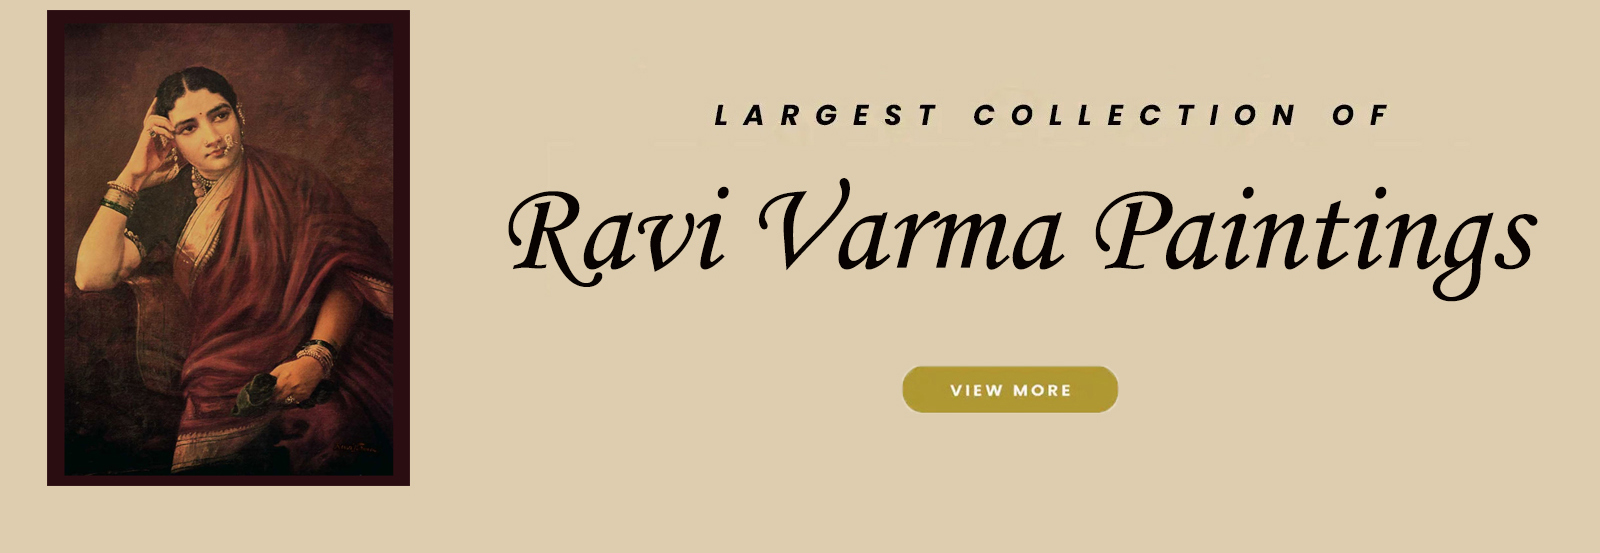 Ravi Varma Painting